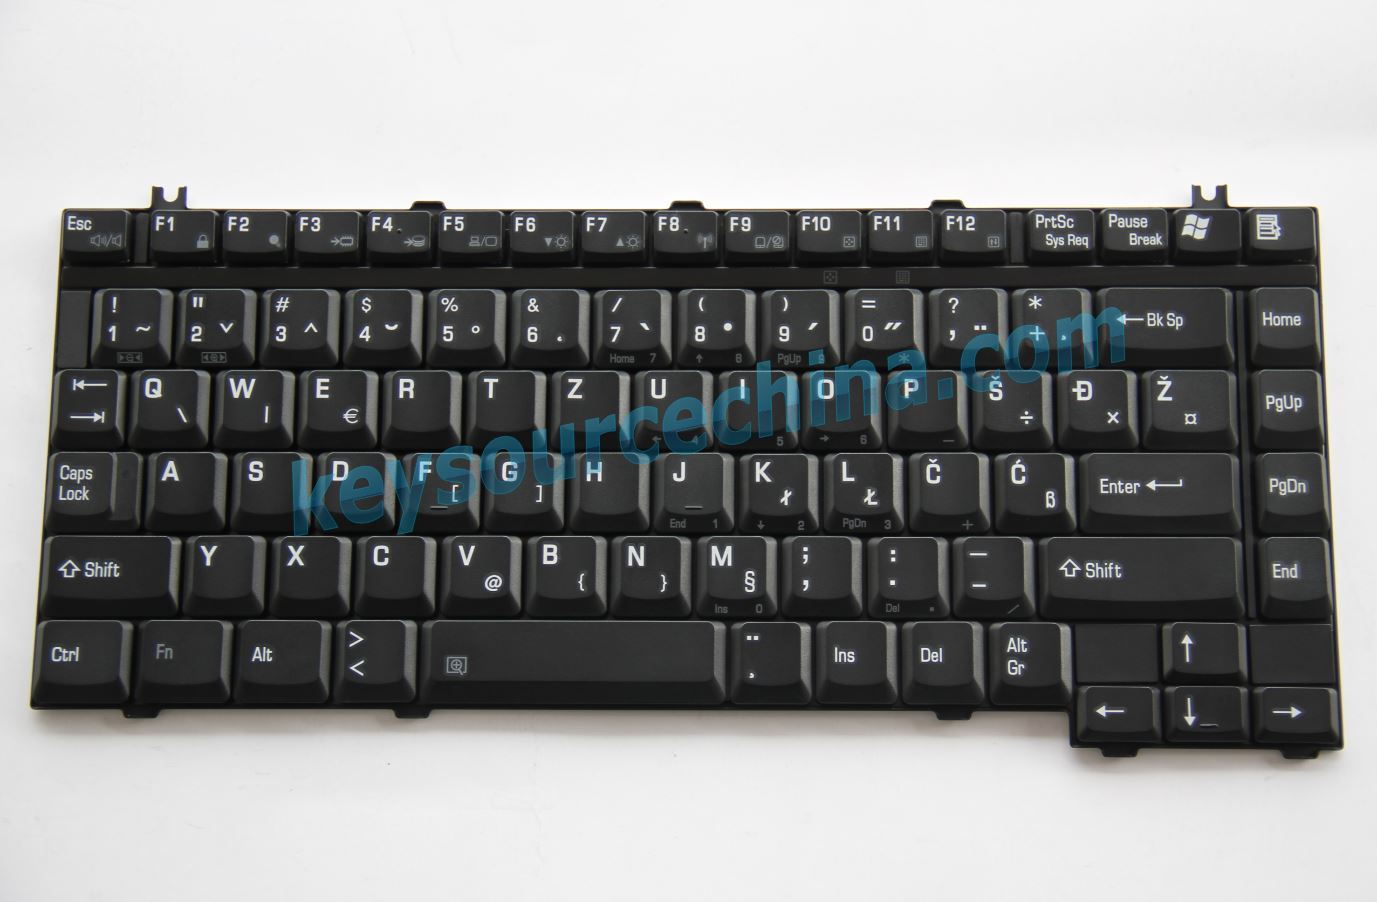 MP-03436YU-9301 Slovenian Croatian Serbian Montenegro Macedonian Tipkovnica for Toshiba A45 A70 A100 M100 G30 1410 keyboard